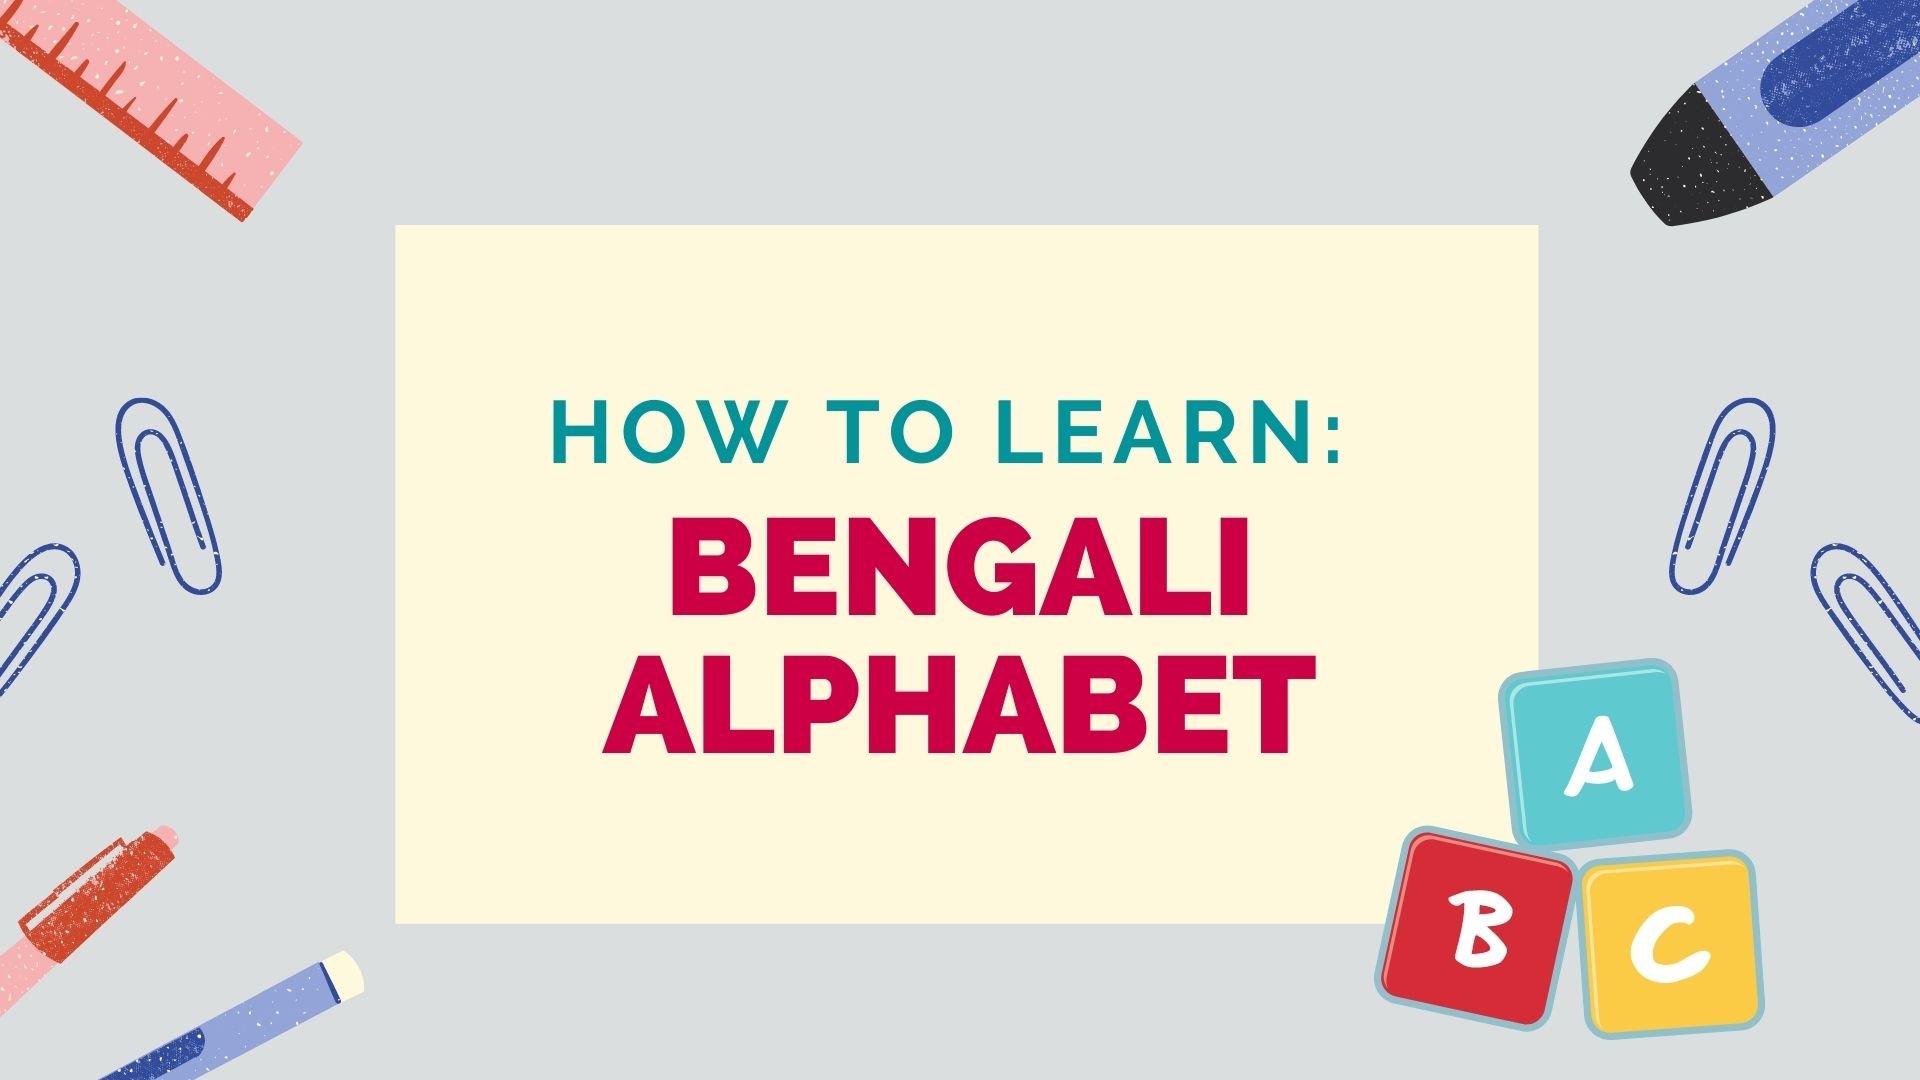 bengali alphabet in word